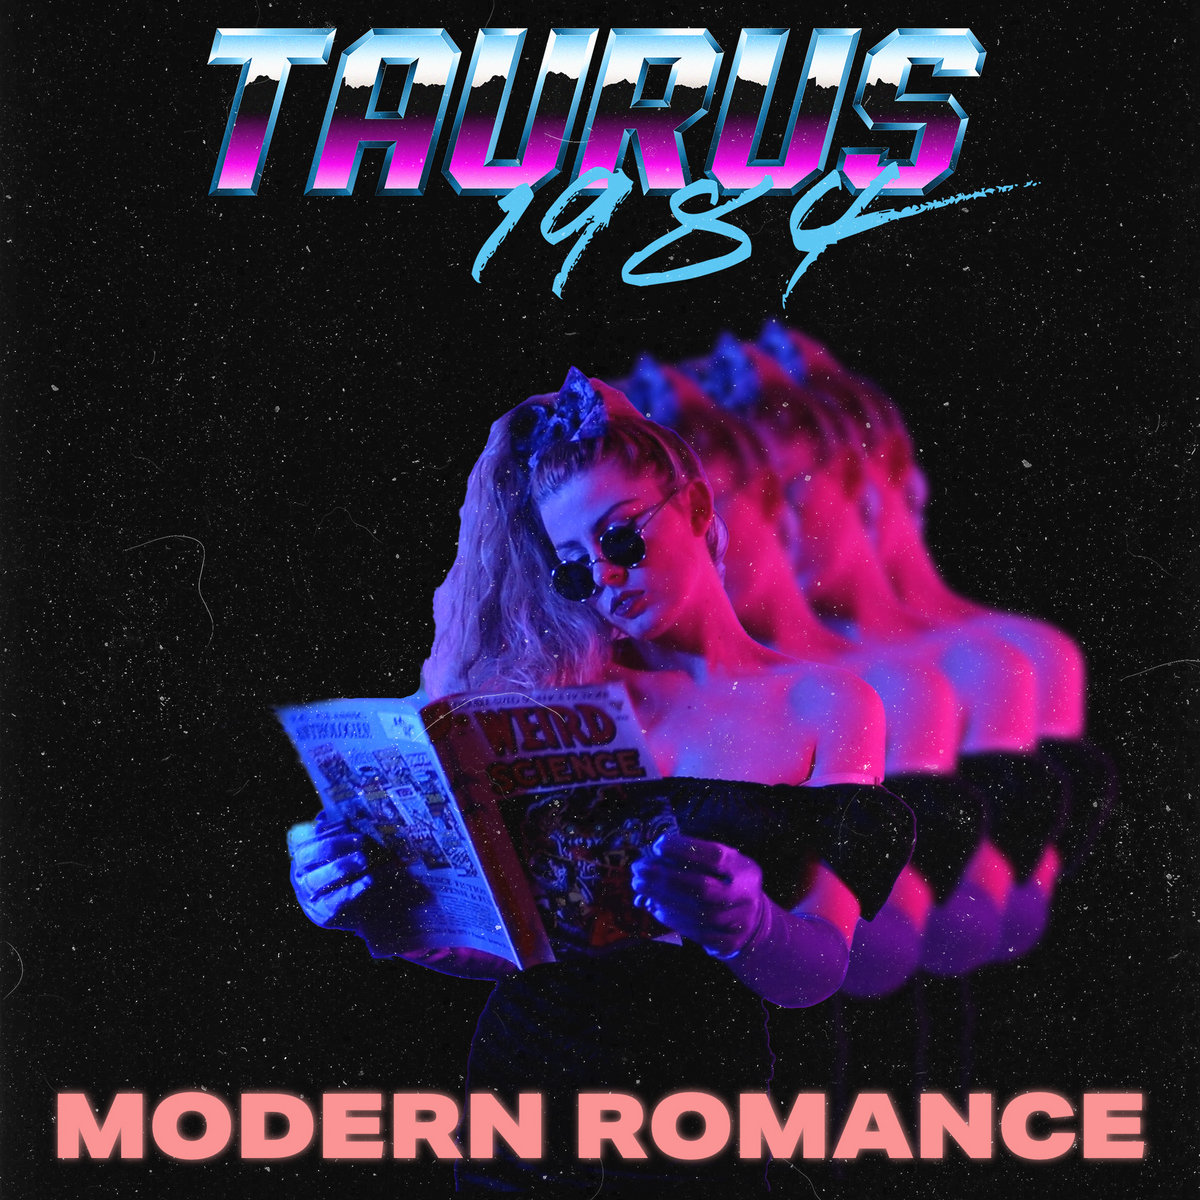 a4201628578 10 - TAURUS 1984 teases another taste of ‘Modern Romance’